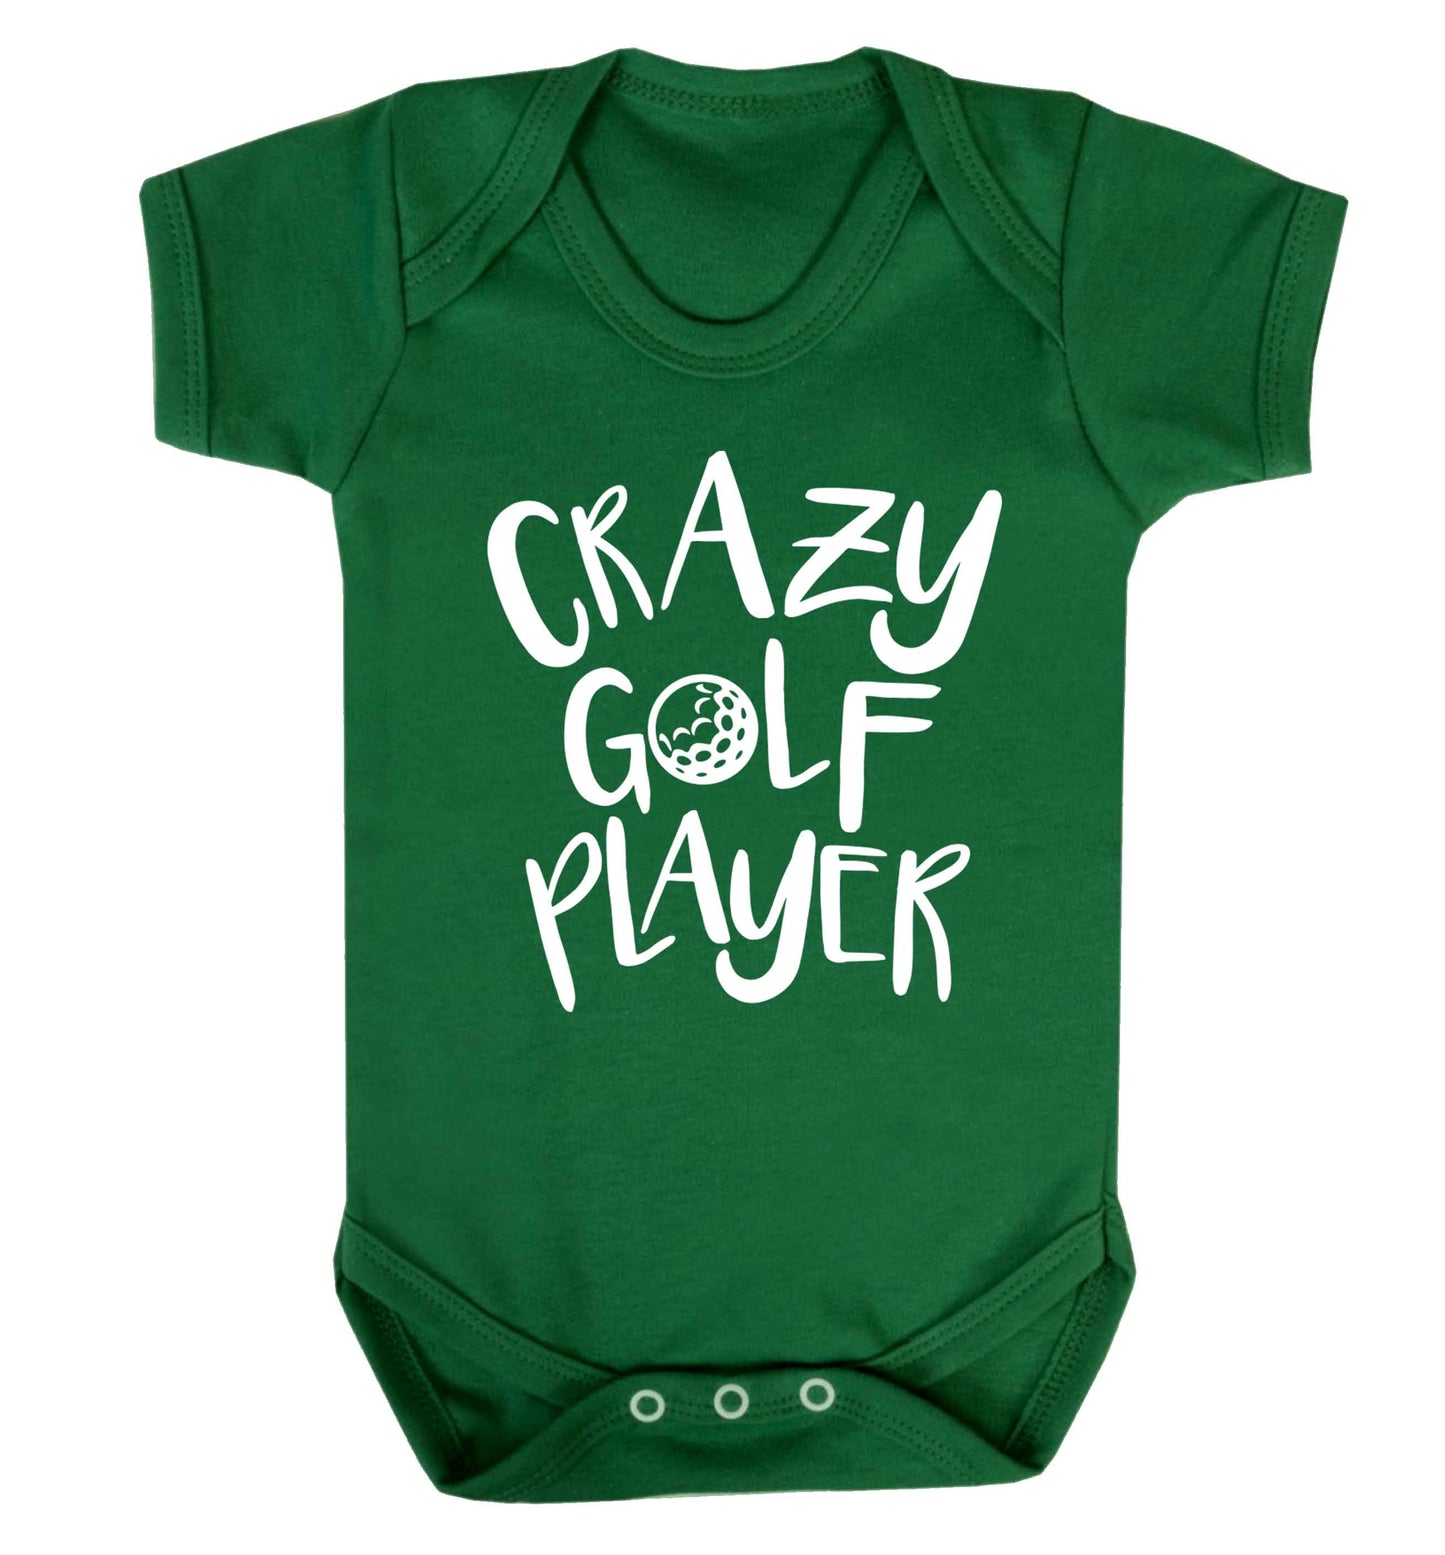 Crazy golf player Baby Vest green 18-24 months